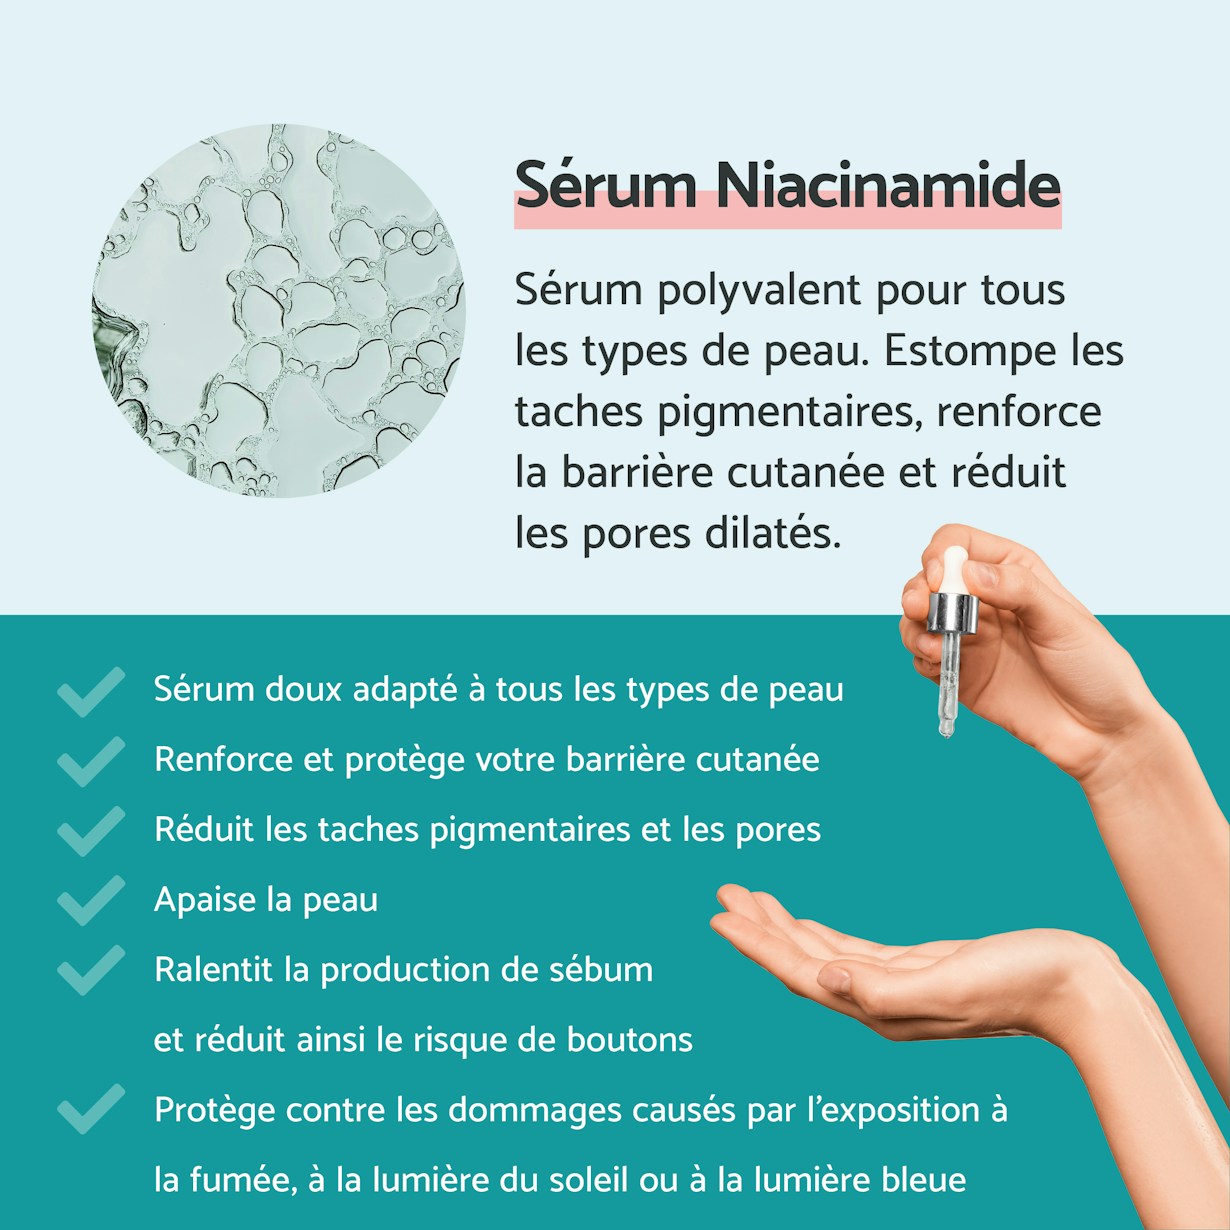 FR Niacinamide Serum Product Images2